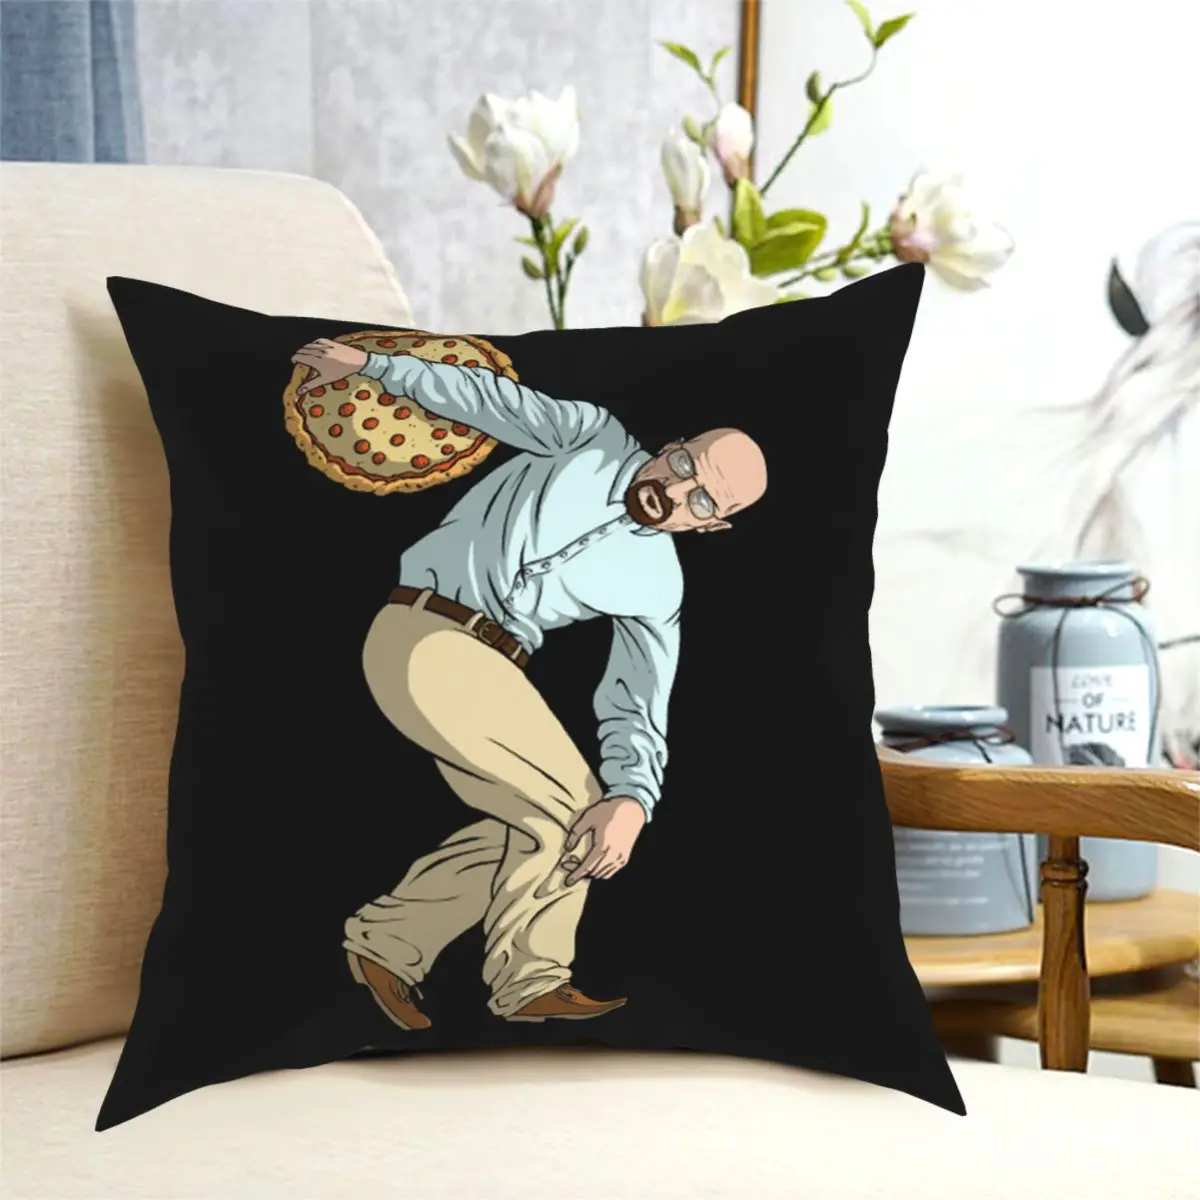 https://ae01.alicdn.com/kf/He4d5b45594e74080bb1424290d53f95c2/Pizzobolus-Breaking-Bad-Pillowcover-Home-Decorative-Walter-White-Hank-Heisenberg-Tv-Show-Cushions-Throw-Pillow-for.jpg